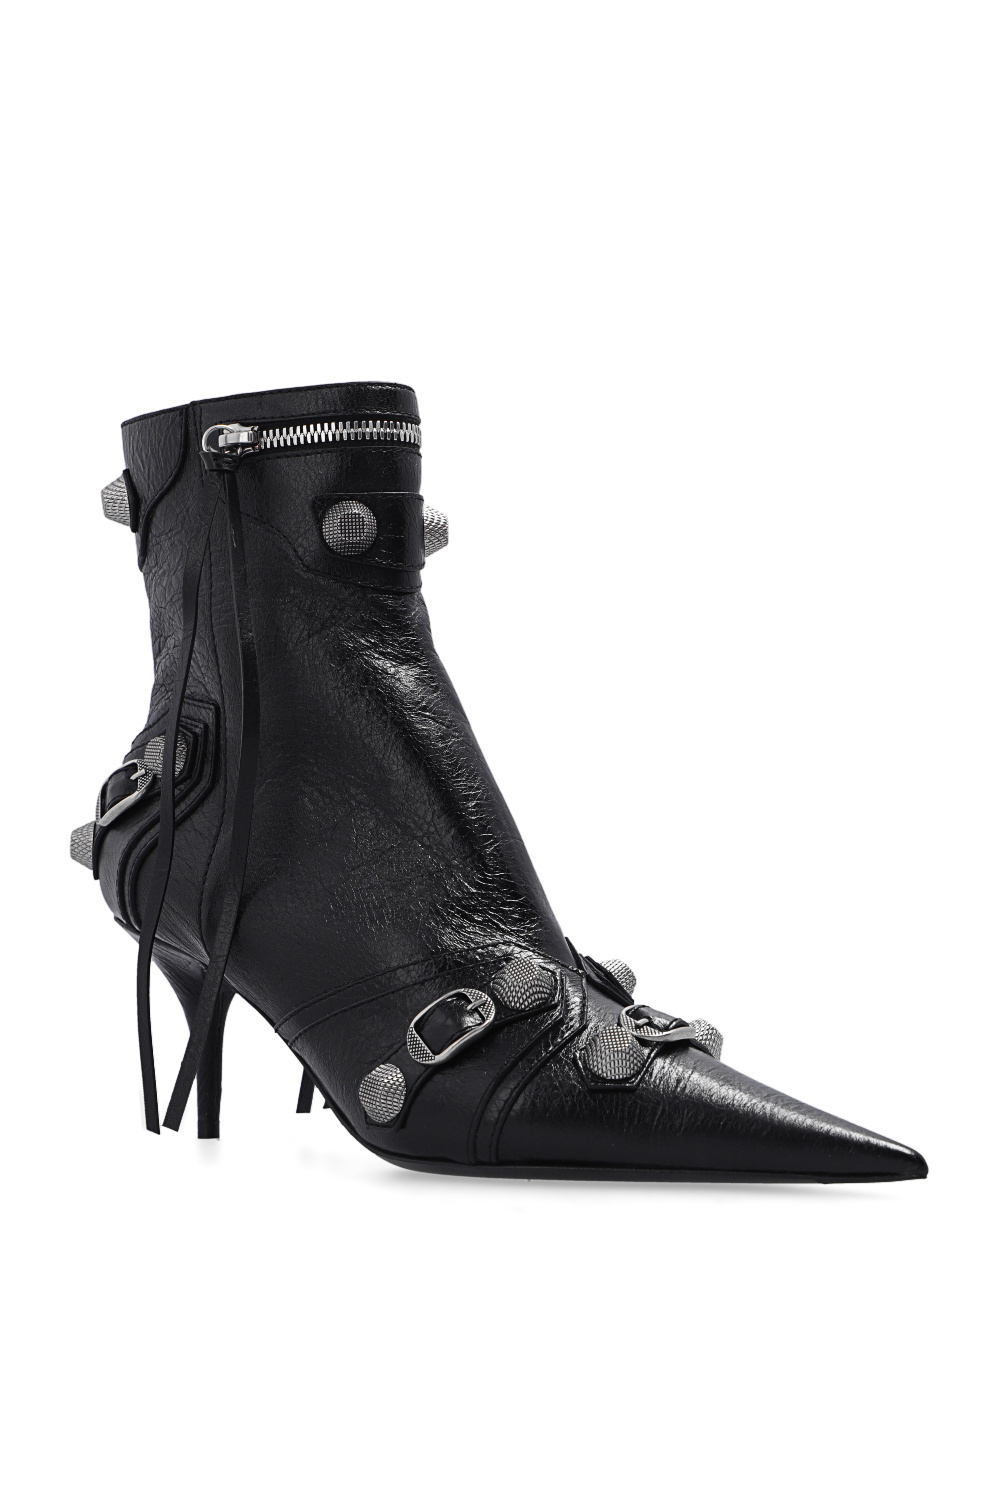 Balenciaga ‘Cagole’ heeled ankle surgeon boots